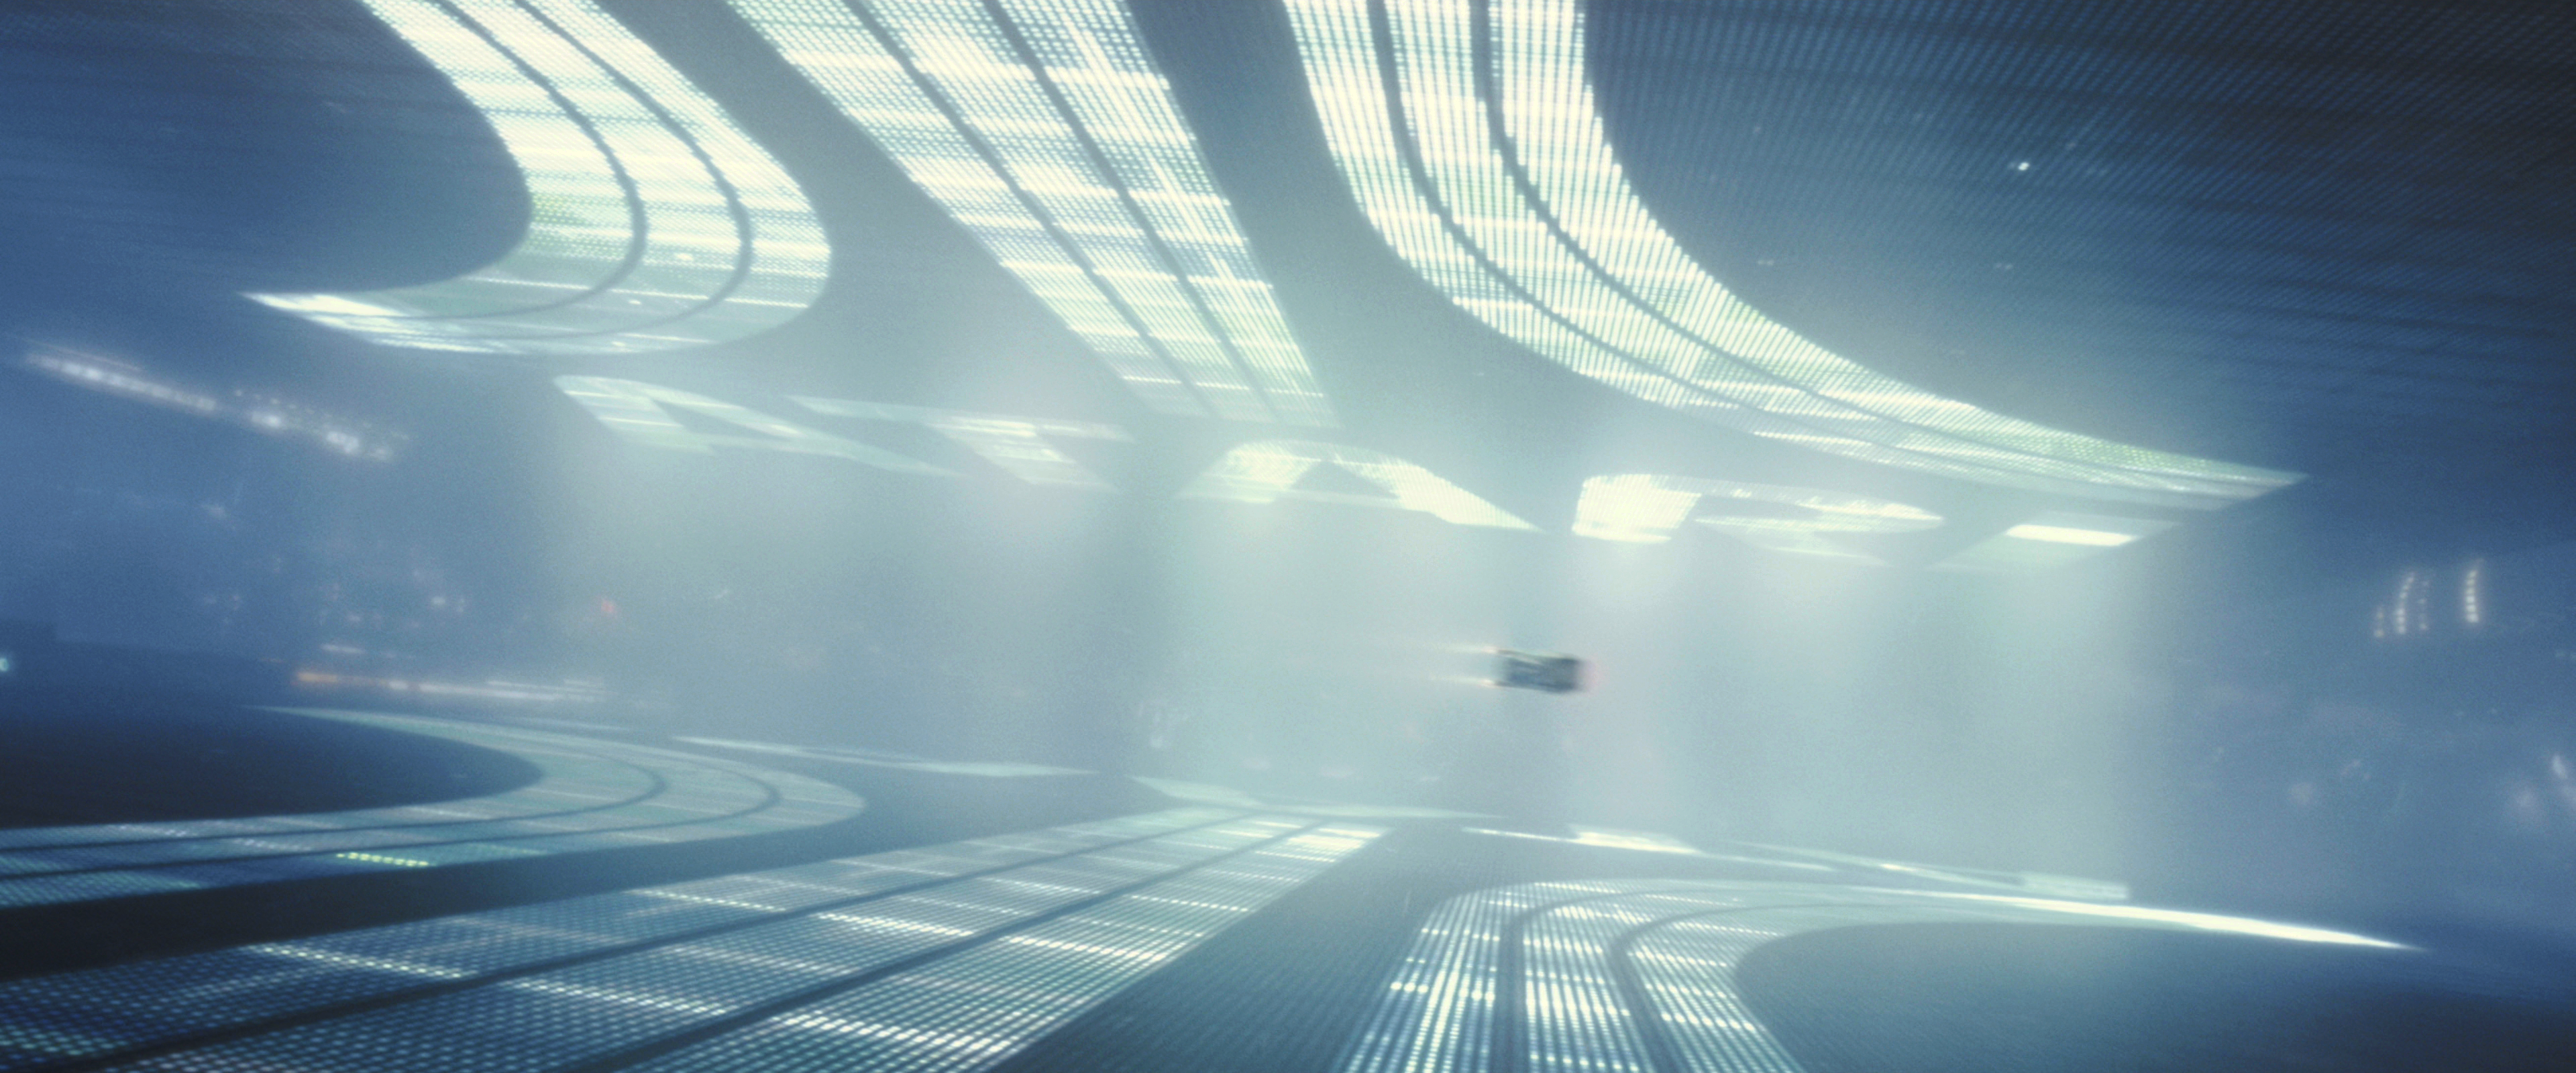 Bladerunner Blade Runner 2049 Cyberpunk Movies Atari Futuristic City 3840x1600